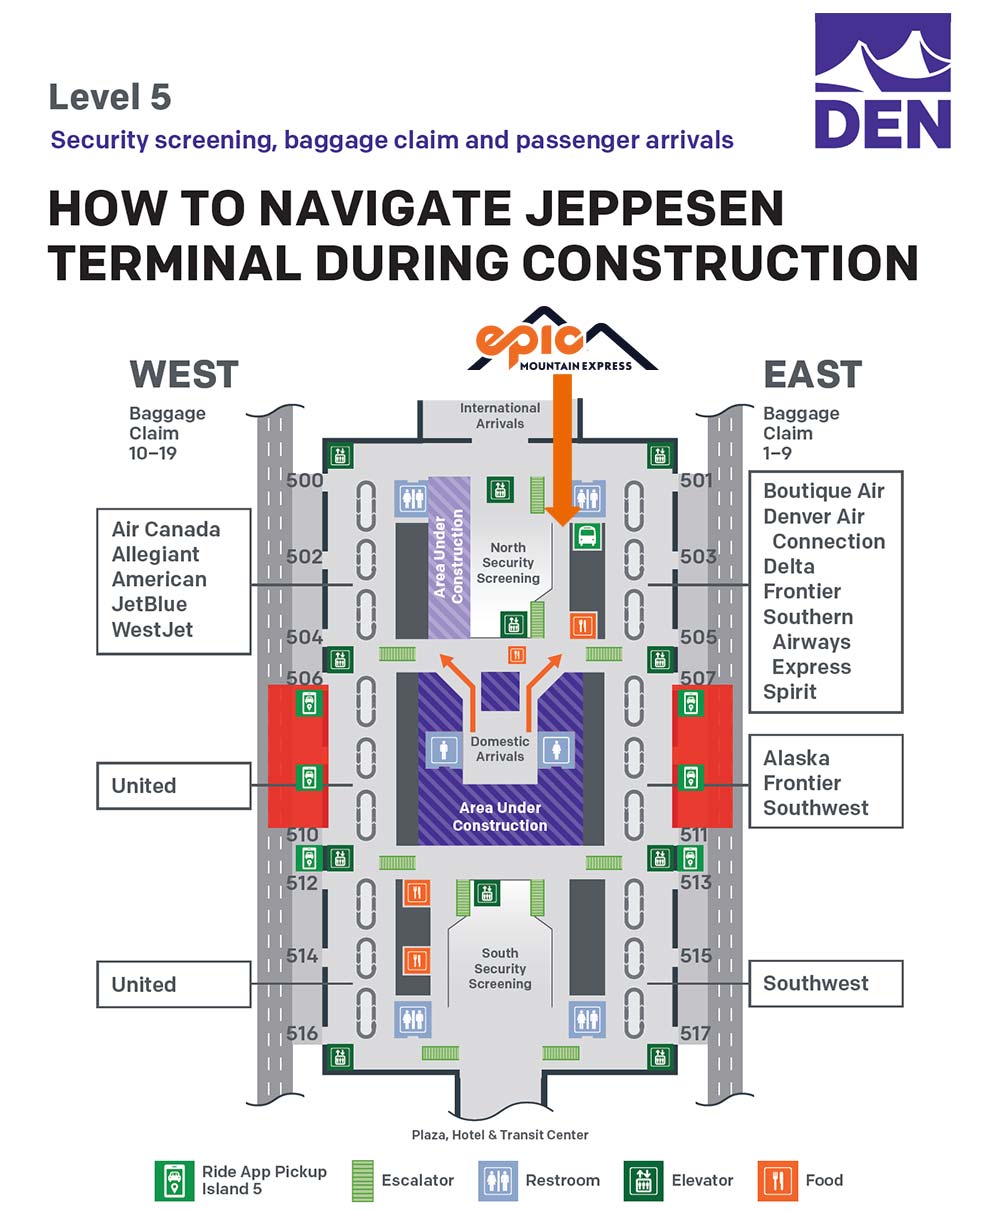 Jeppesen Terminal in DIA/ DEN Airport